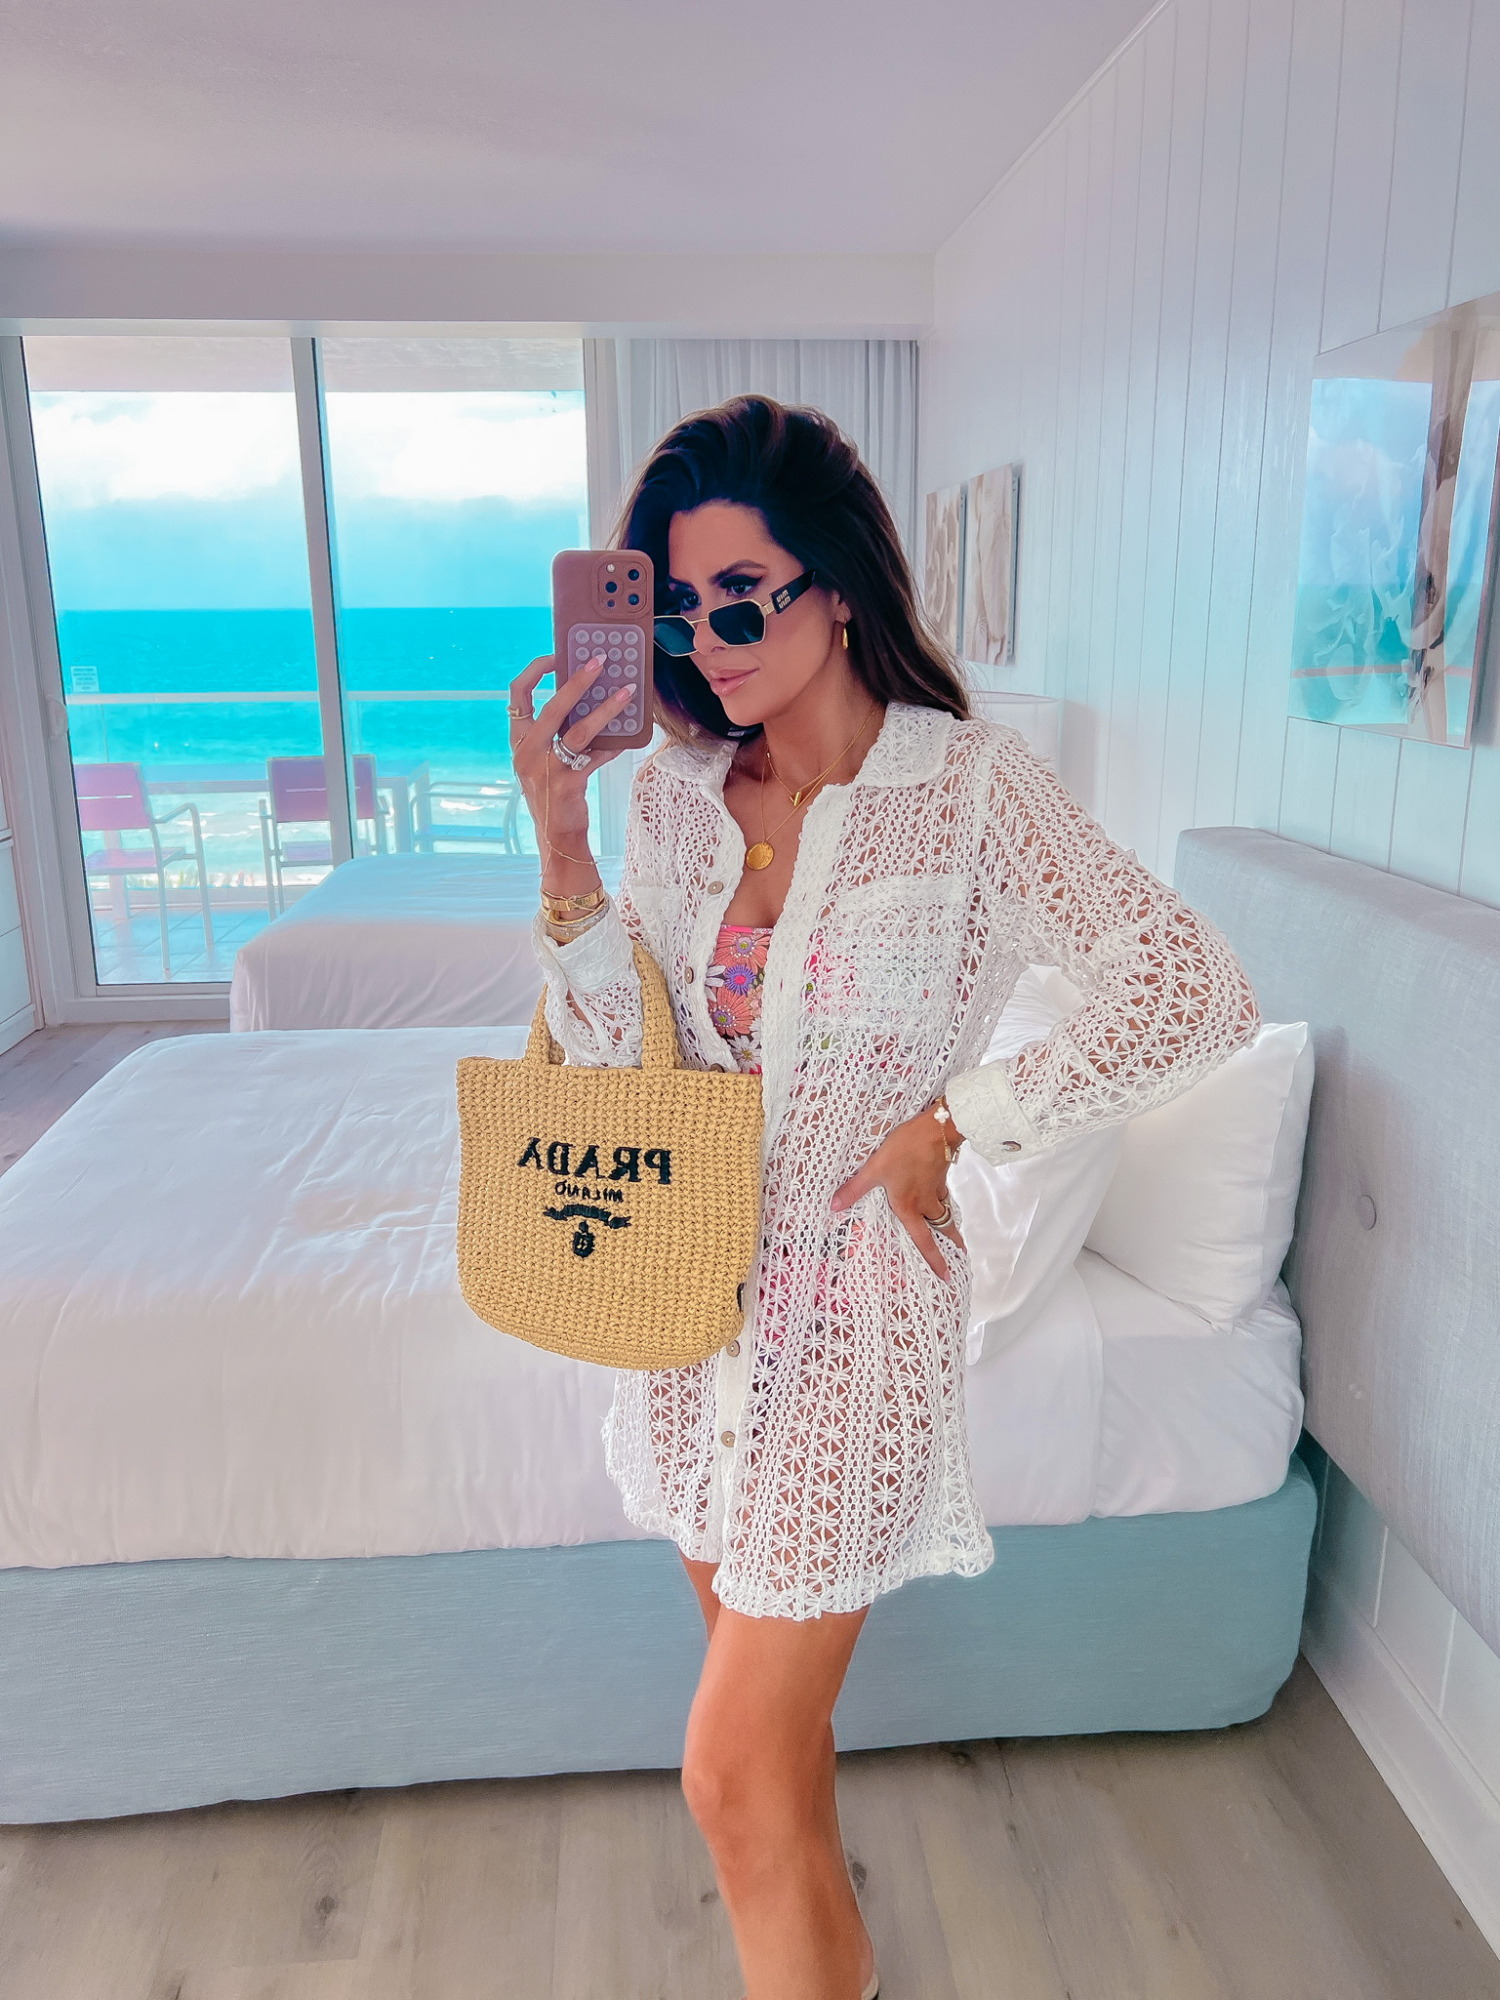 Miu Miu Tinted Cat-Eye Sunglasses, Red Dress Boutique Try On Haul, Prada Straw Beach Bag, Miami Fashion Blogger, Emily Ann Gemma